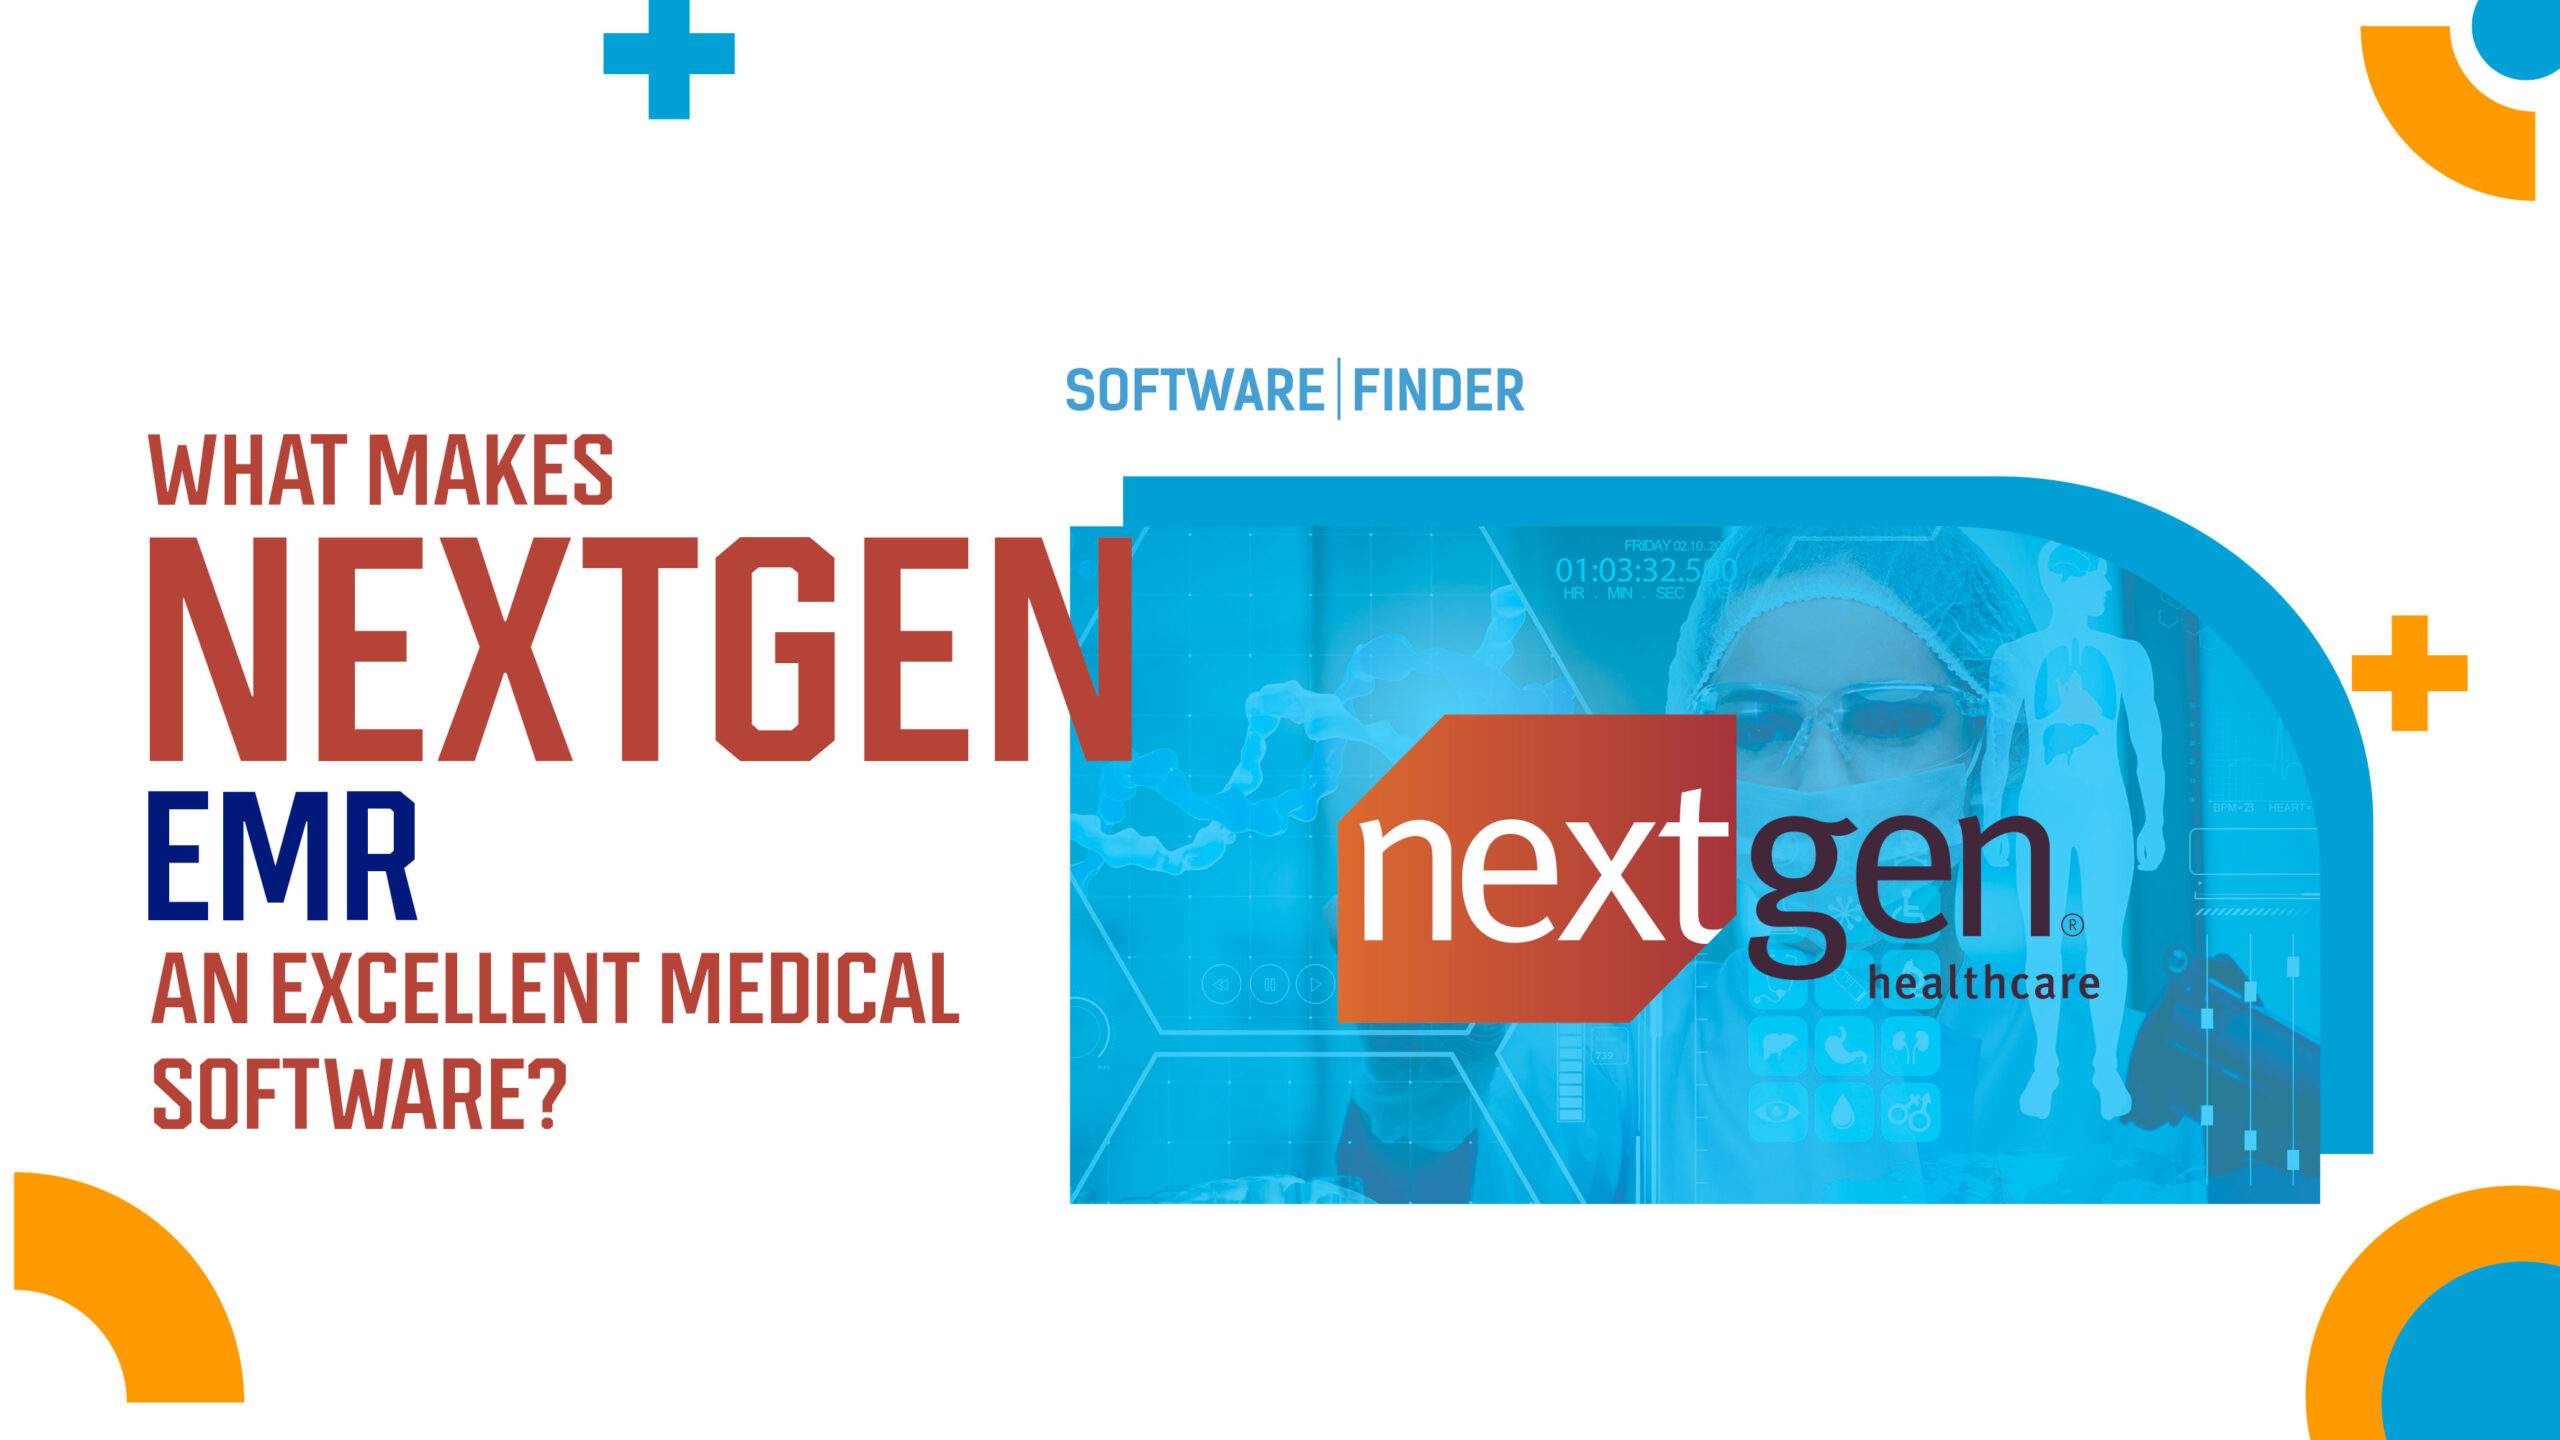 NextGen EHR Software And Its Features